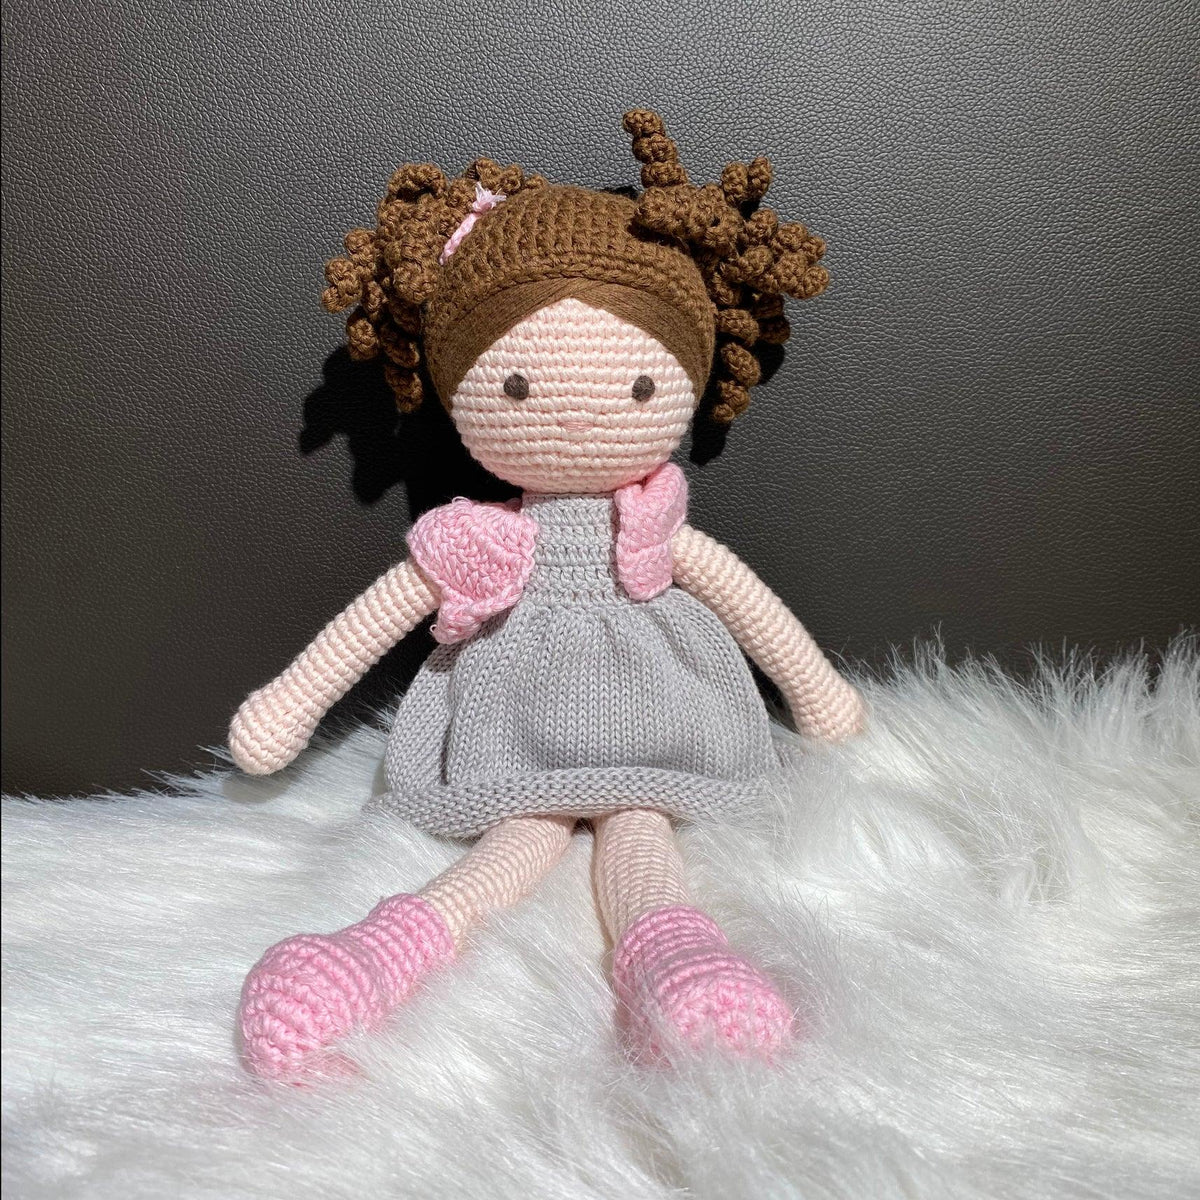 May's Hand Grey Dress Girl Crochet - Kids Haven